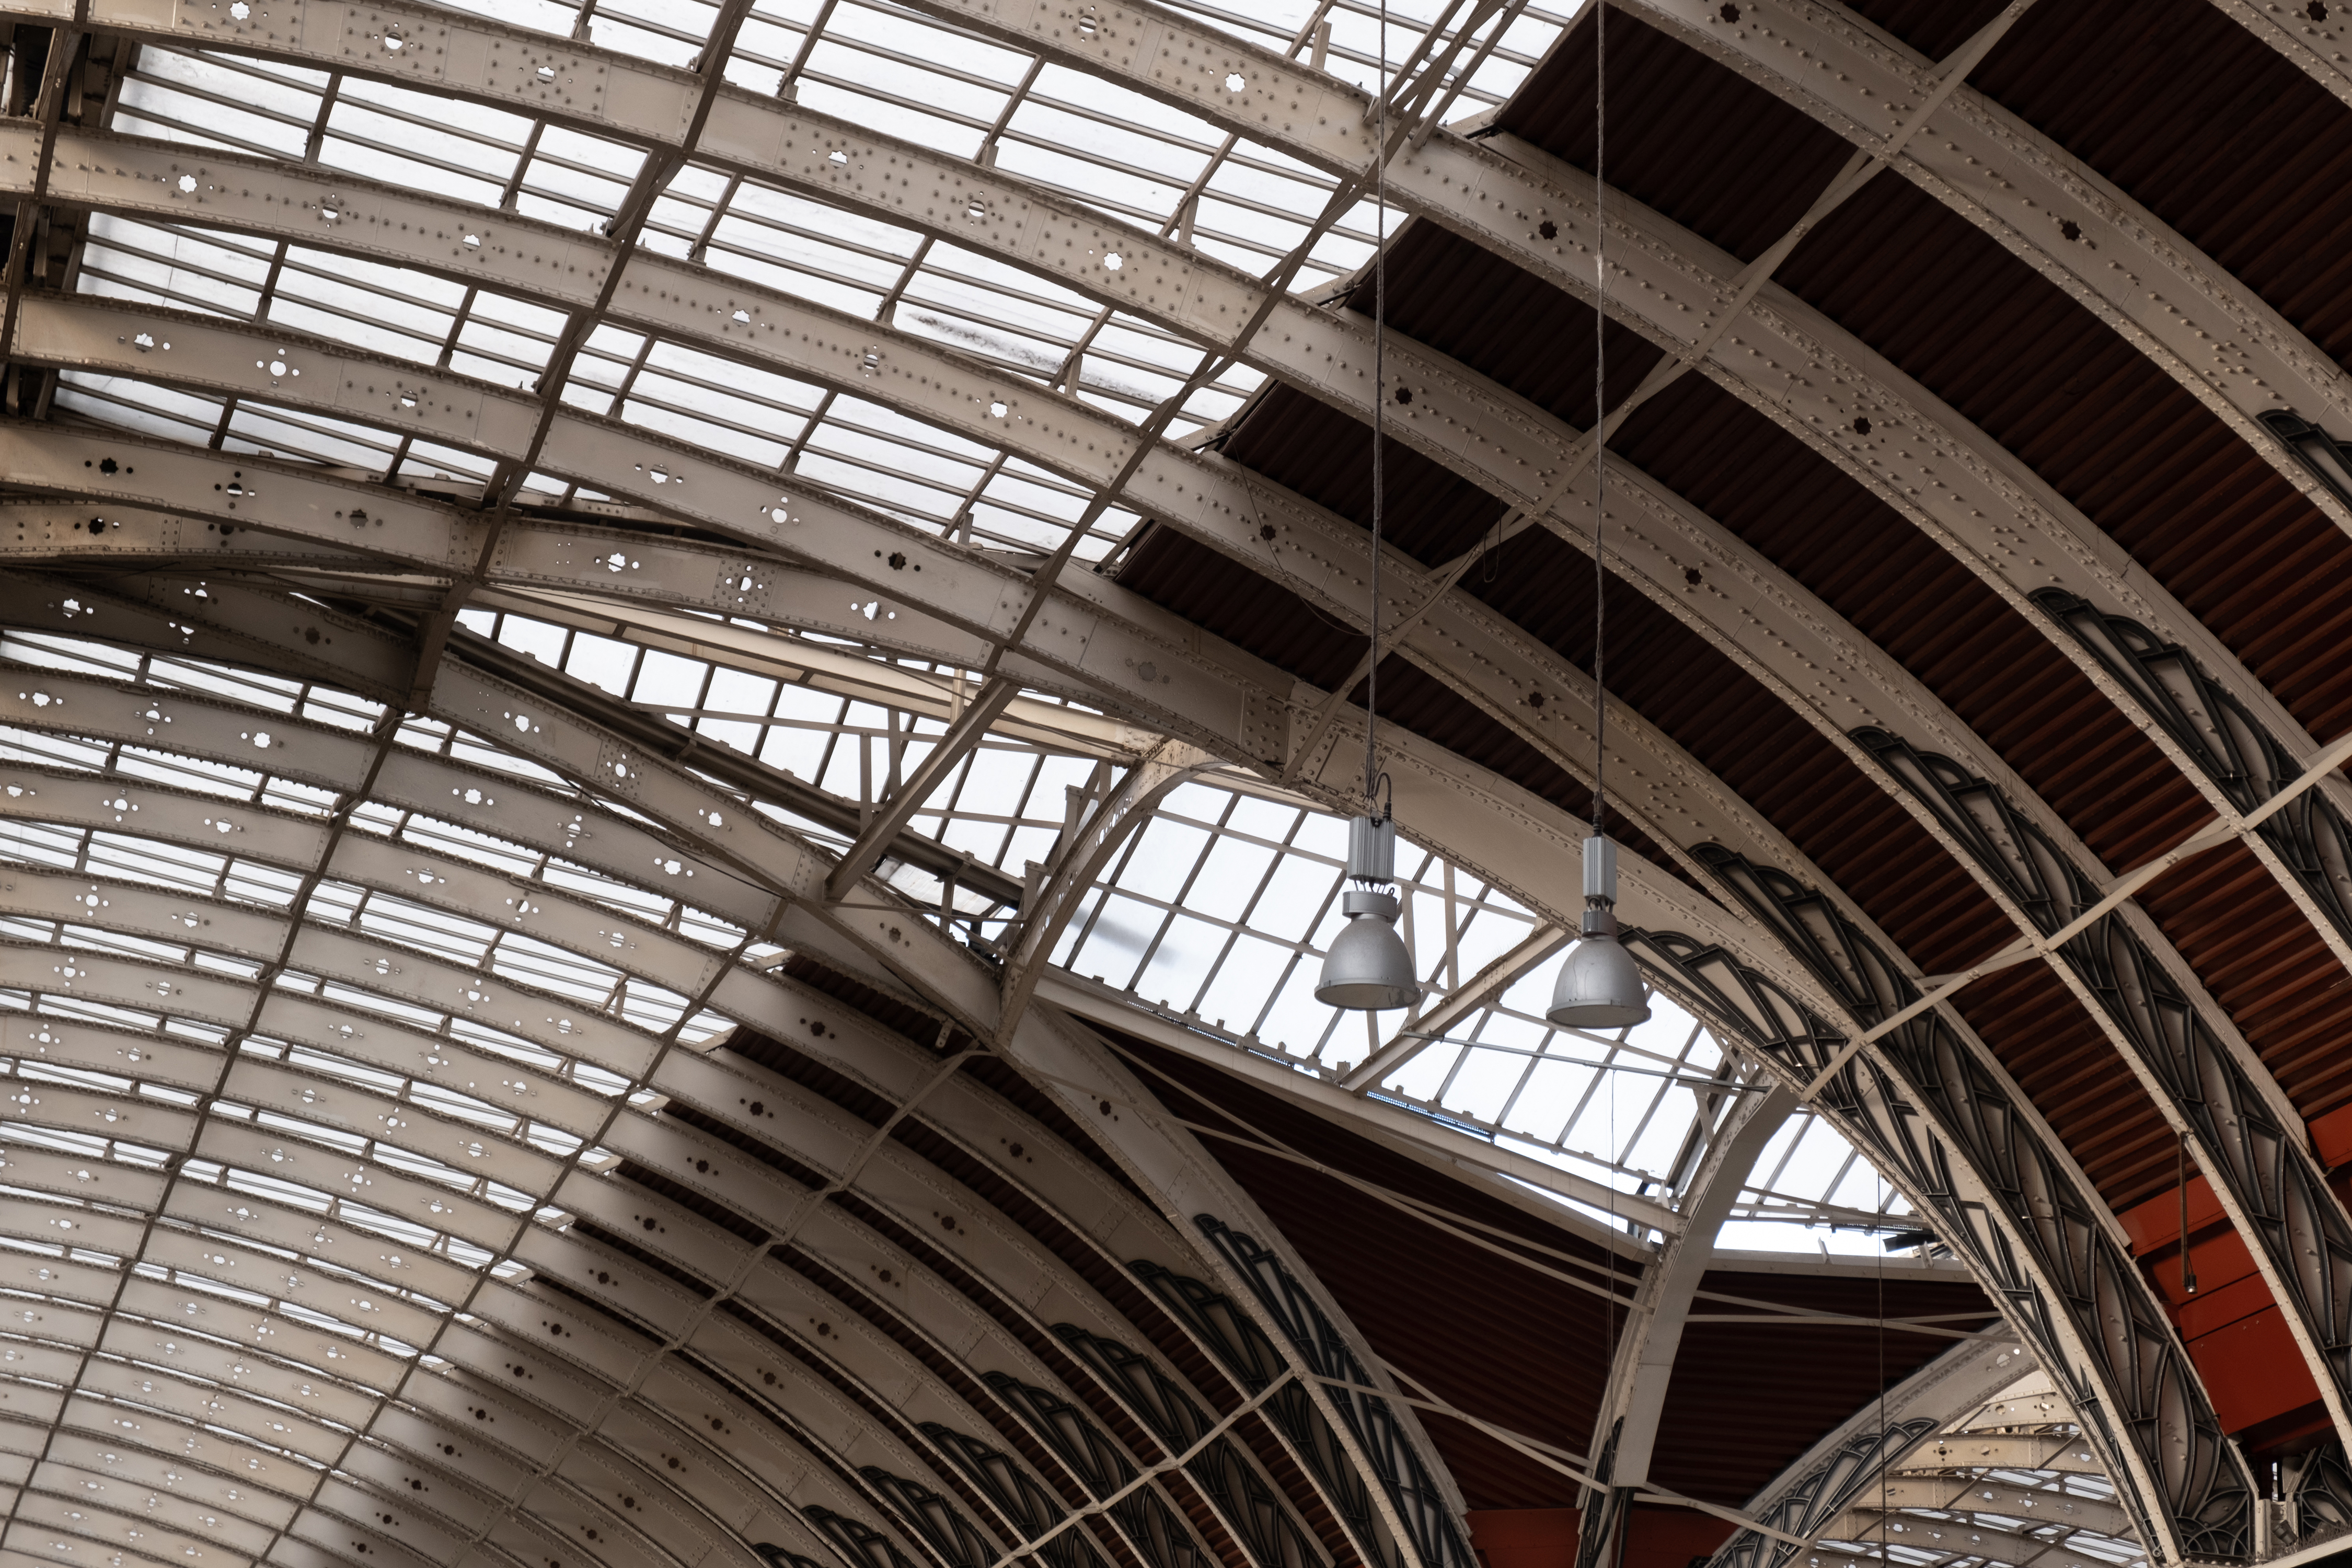 The roof at Paddington Station